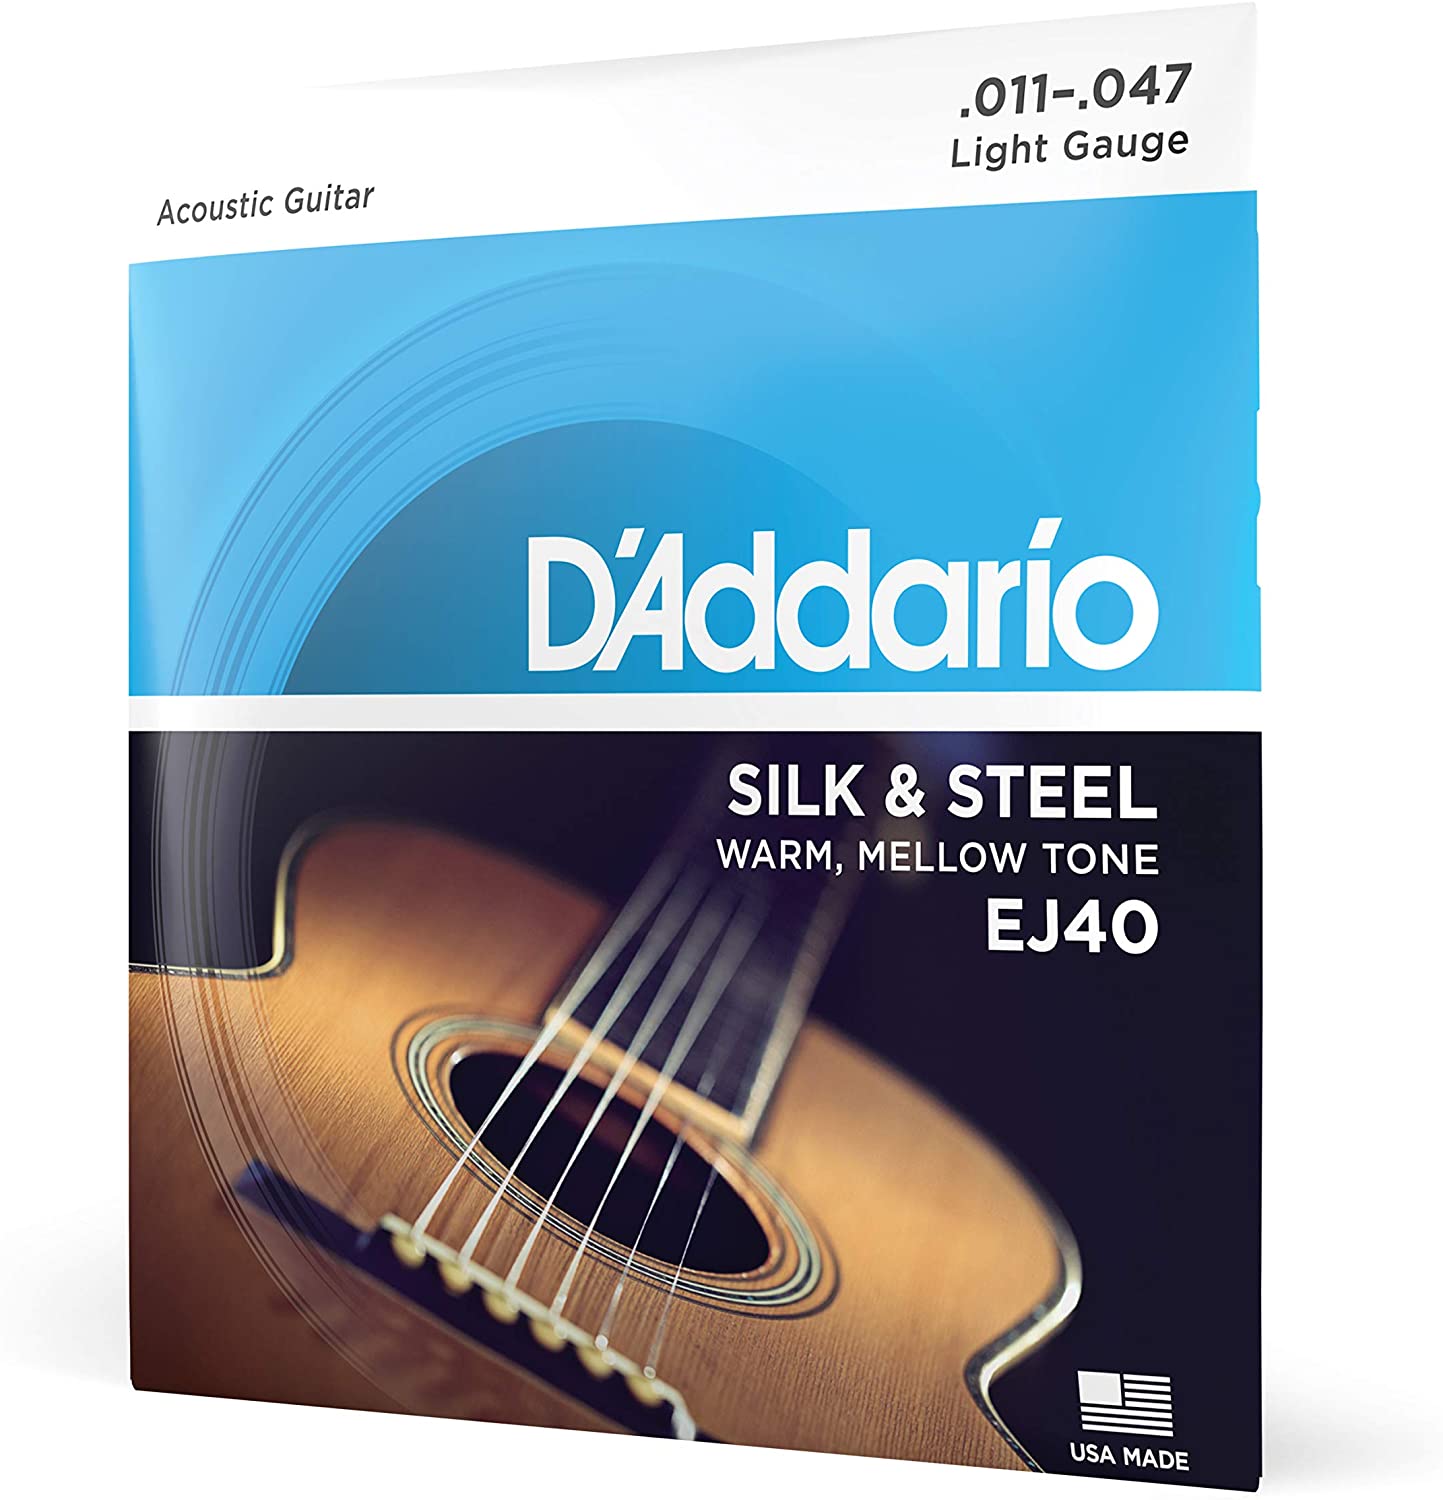 D'Addario's Folk Acoustic Guitar Strings Regular Light Gauge